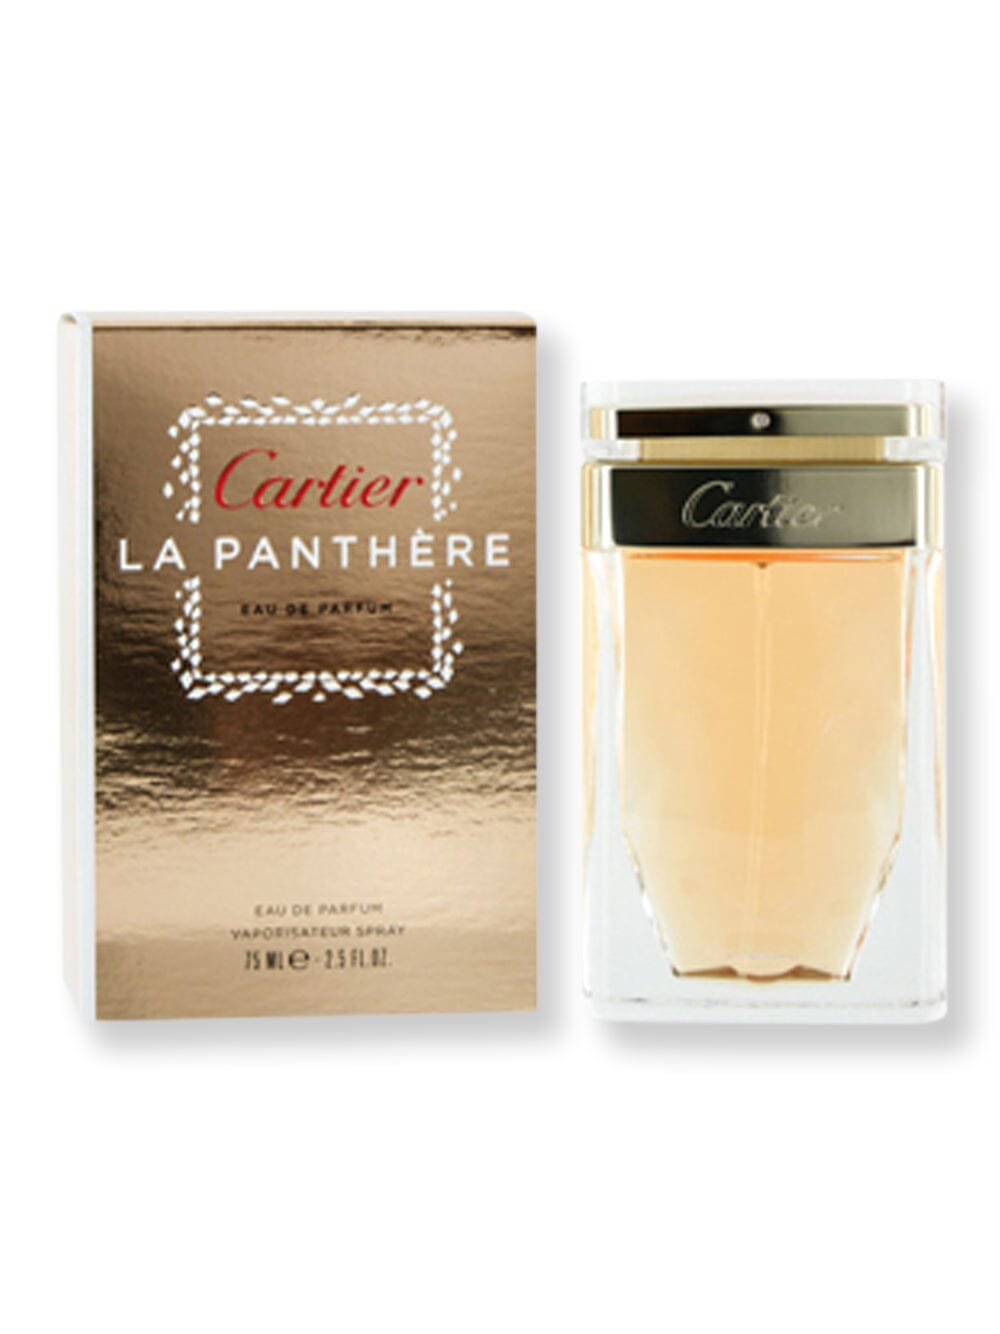 Cartier Cartier La Panthere EDP Spray 2.5 oz75 ml Perfume 